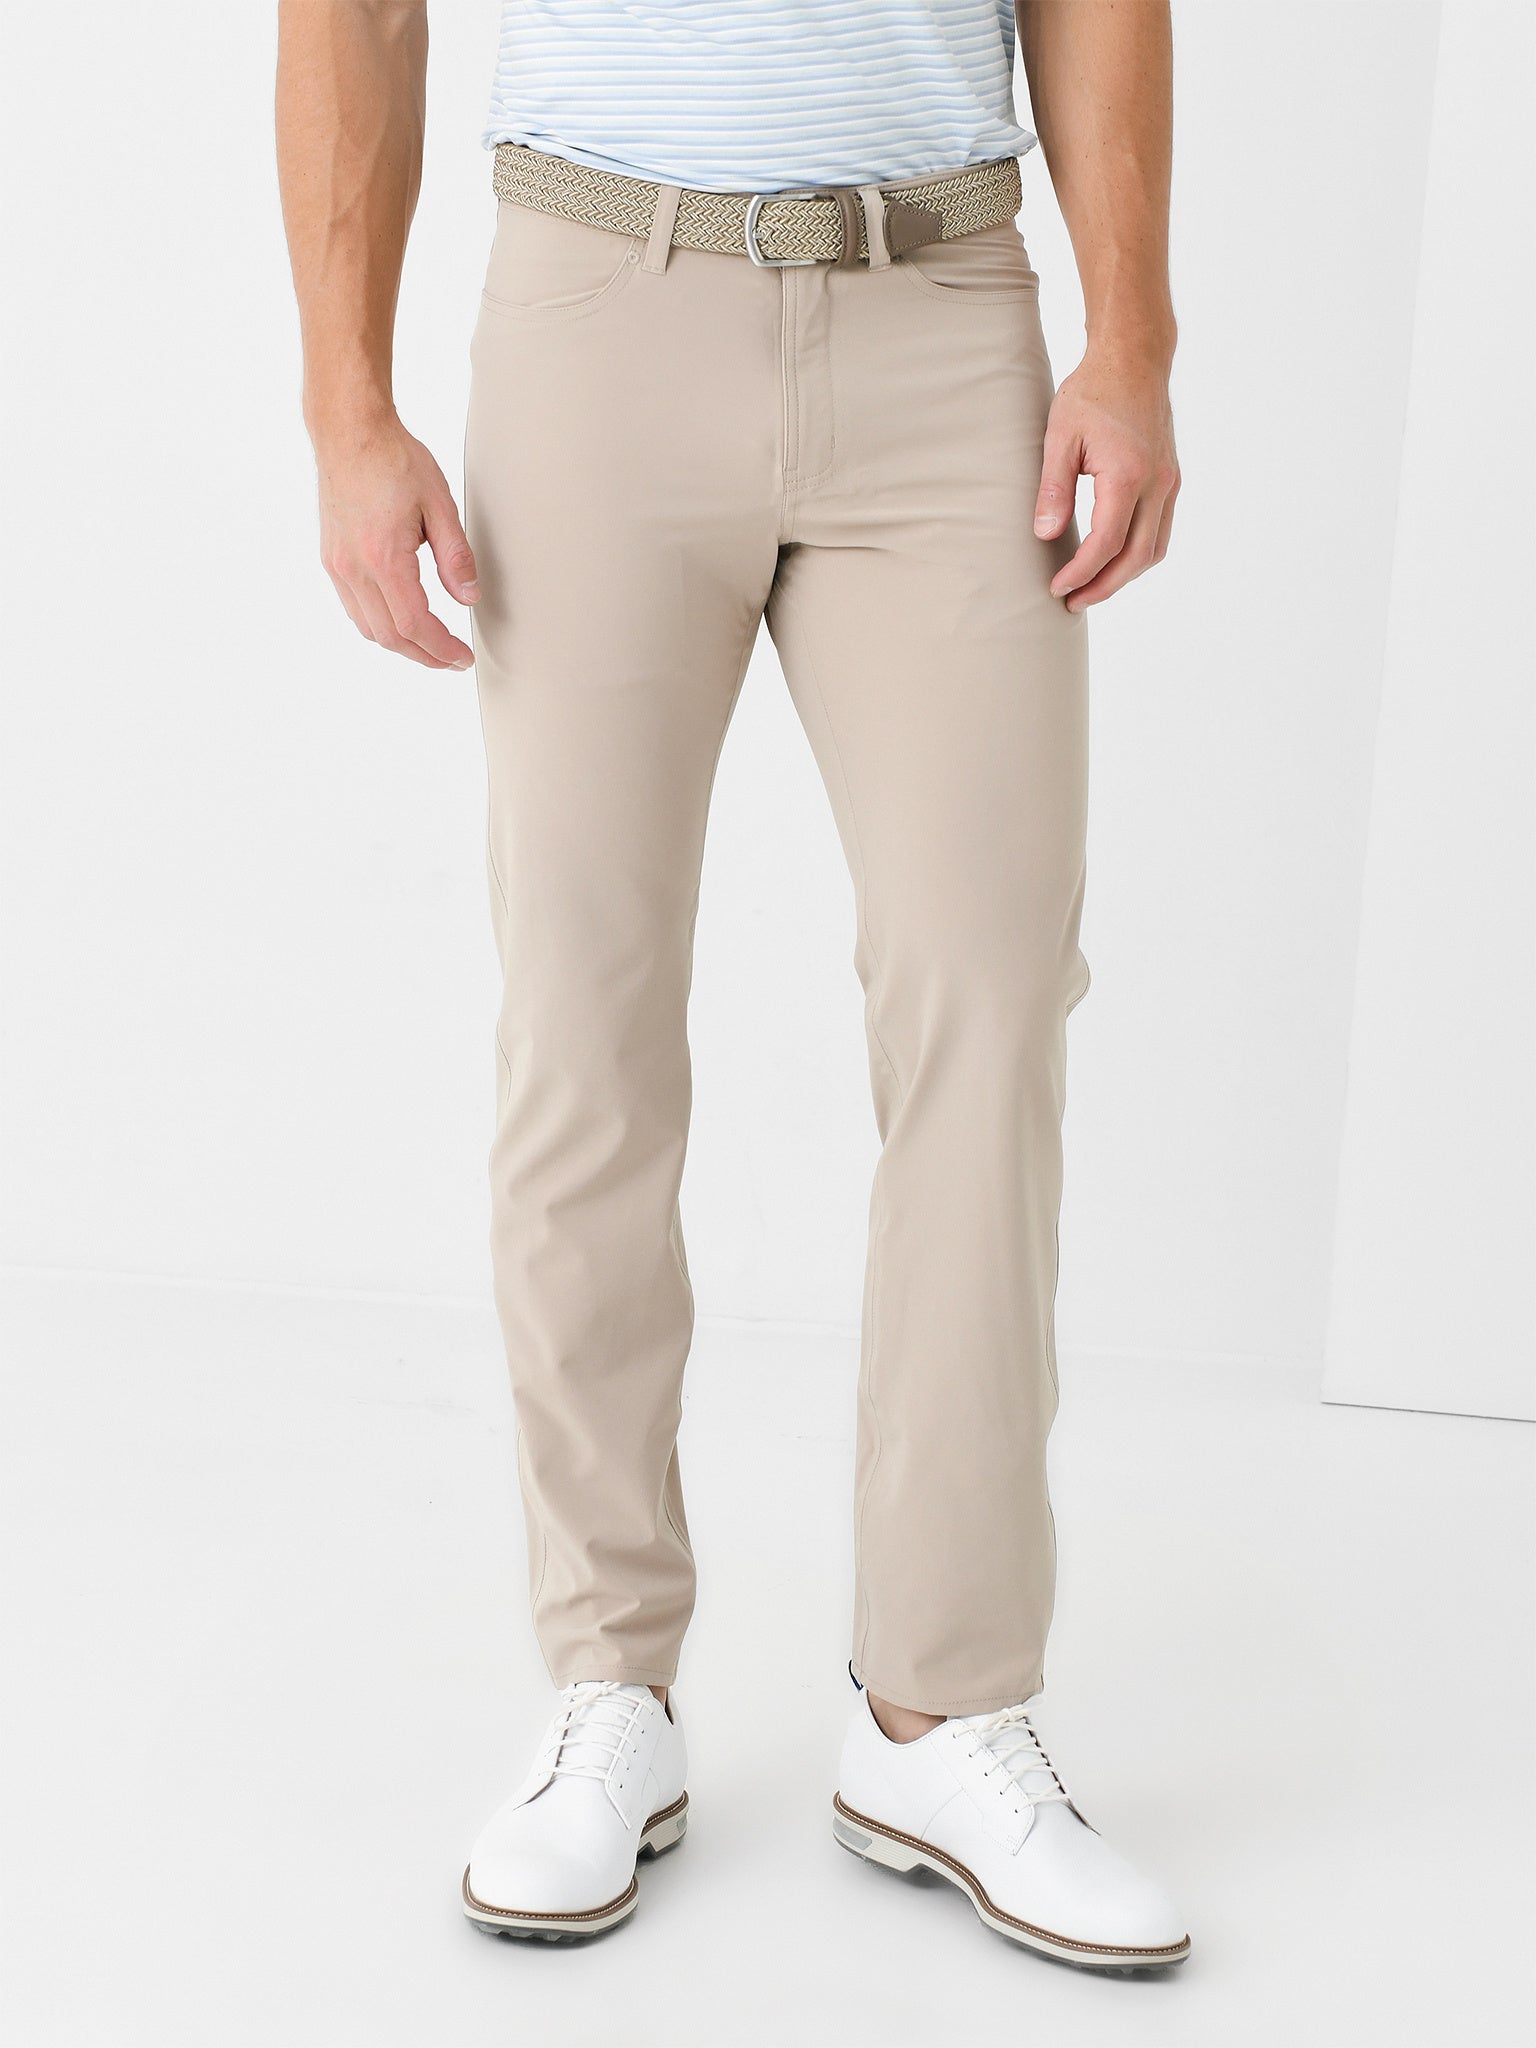 Peter Millar crown sport performance golf pants size 38